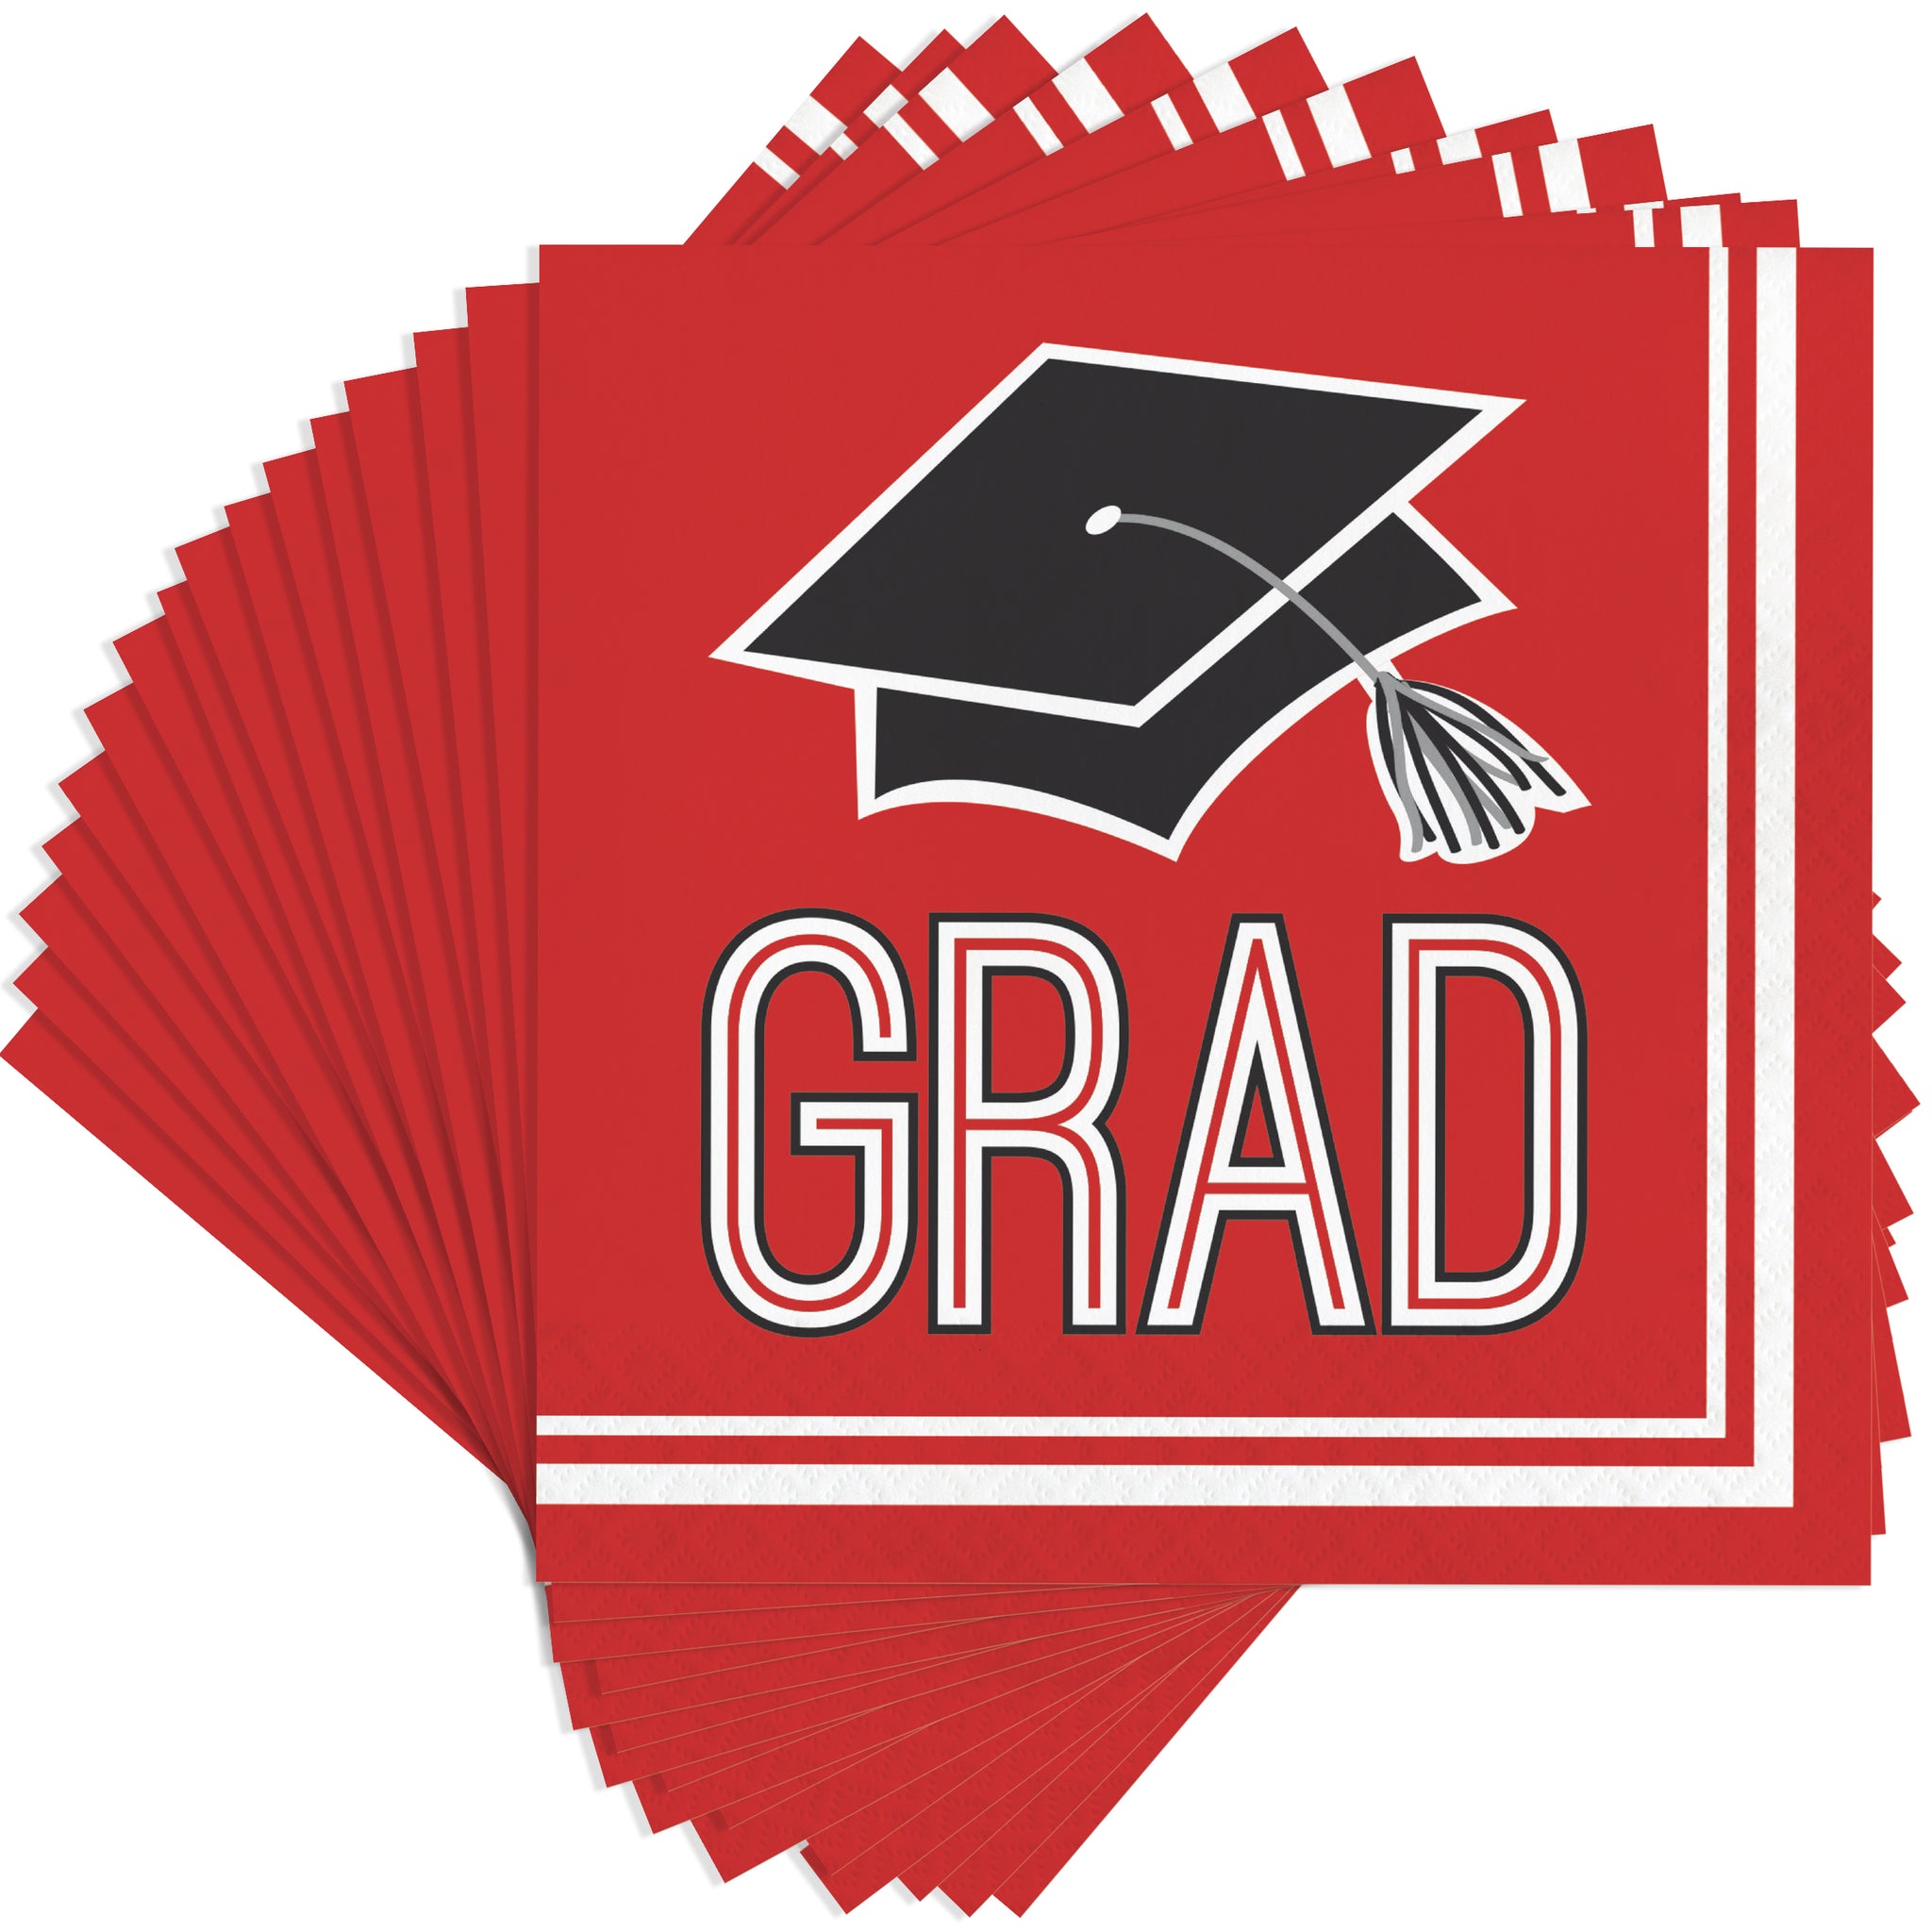 Grad Red Luncheon Napkins 50ct | Graduation